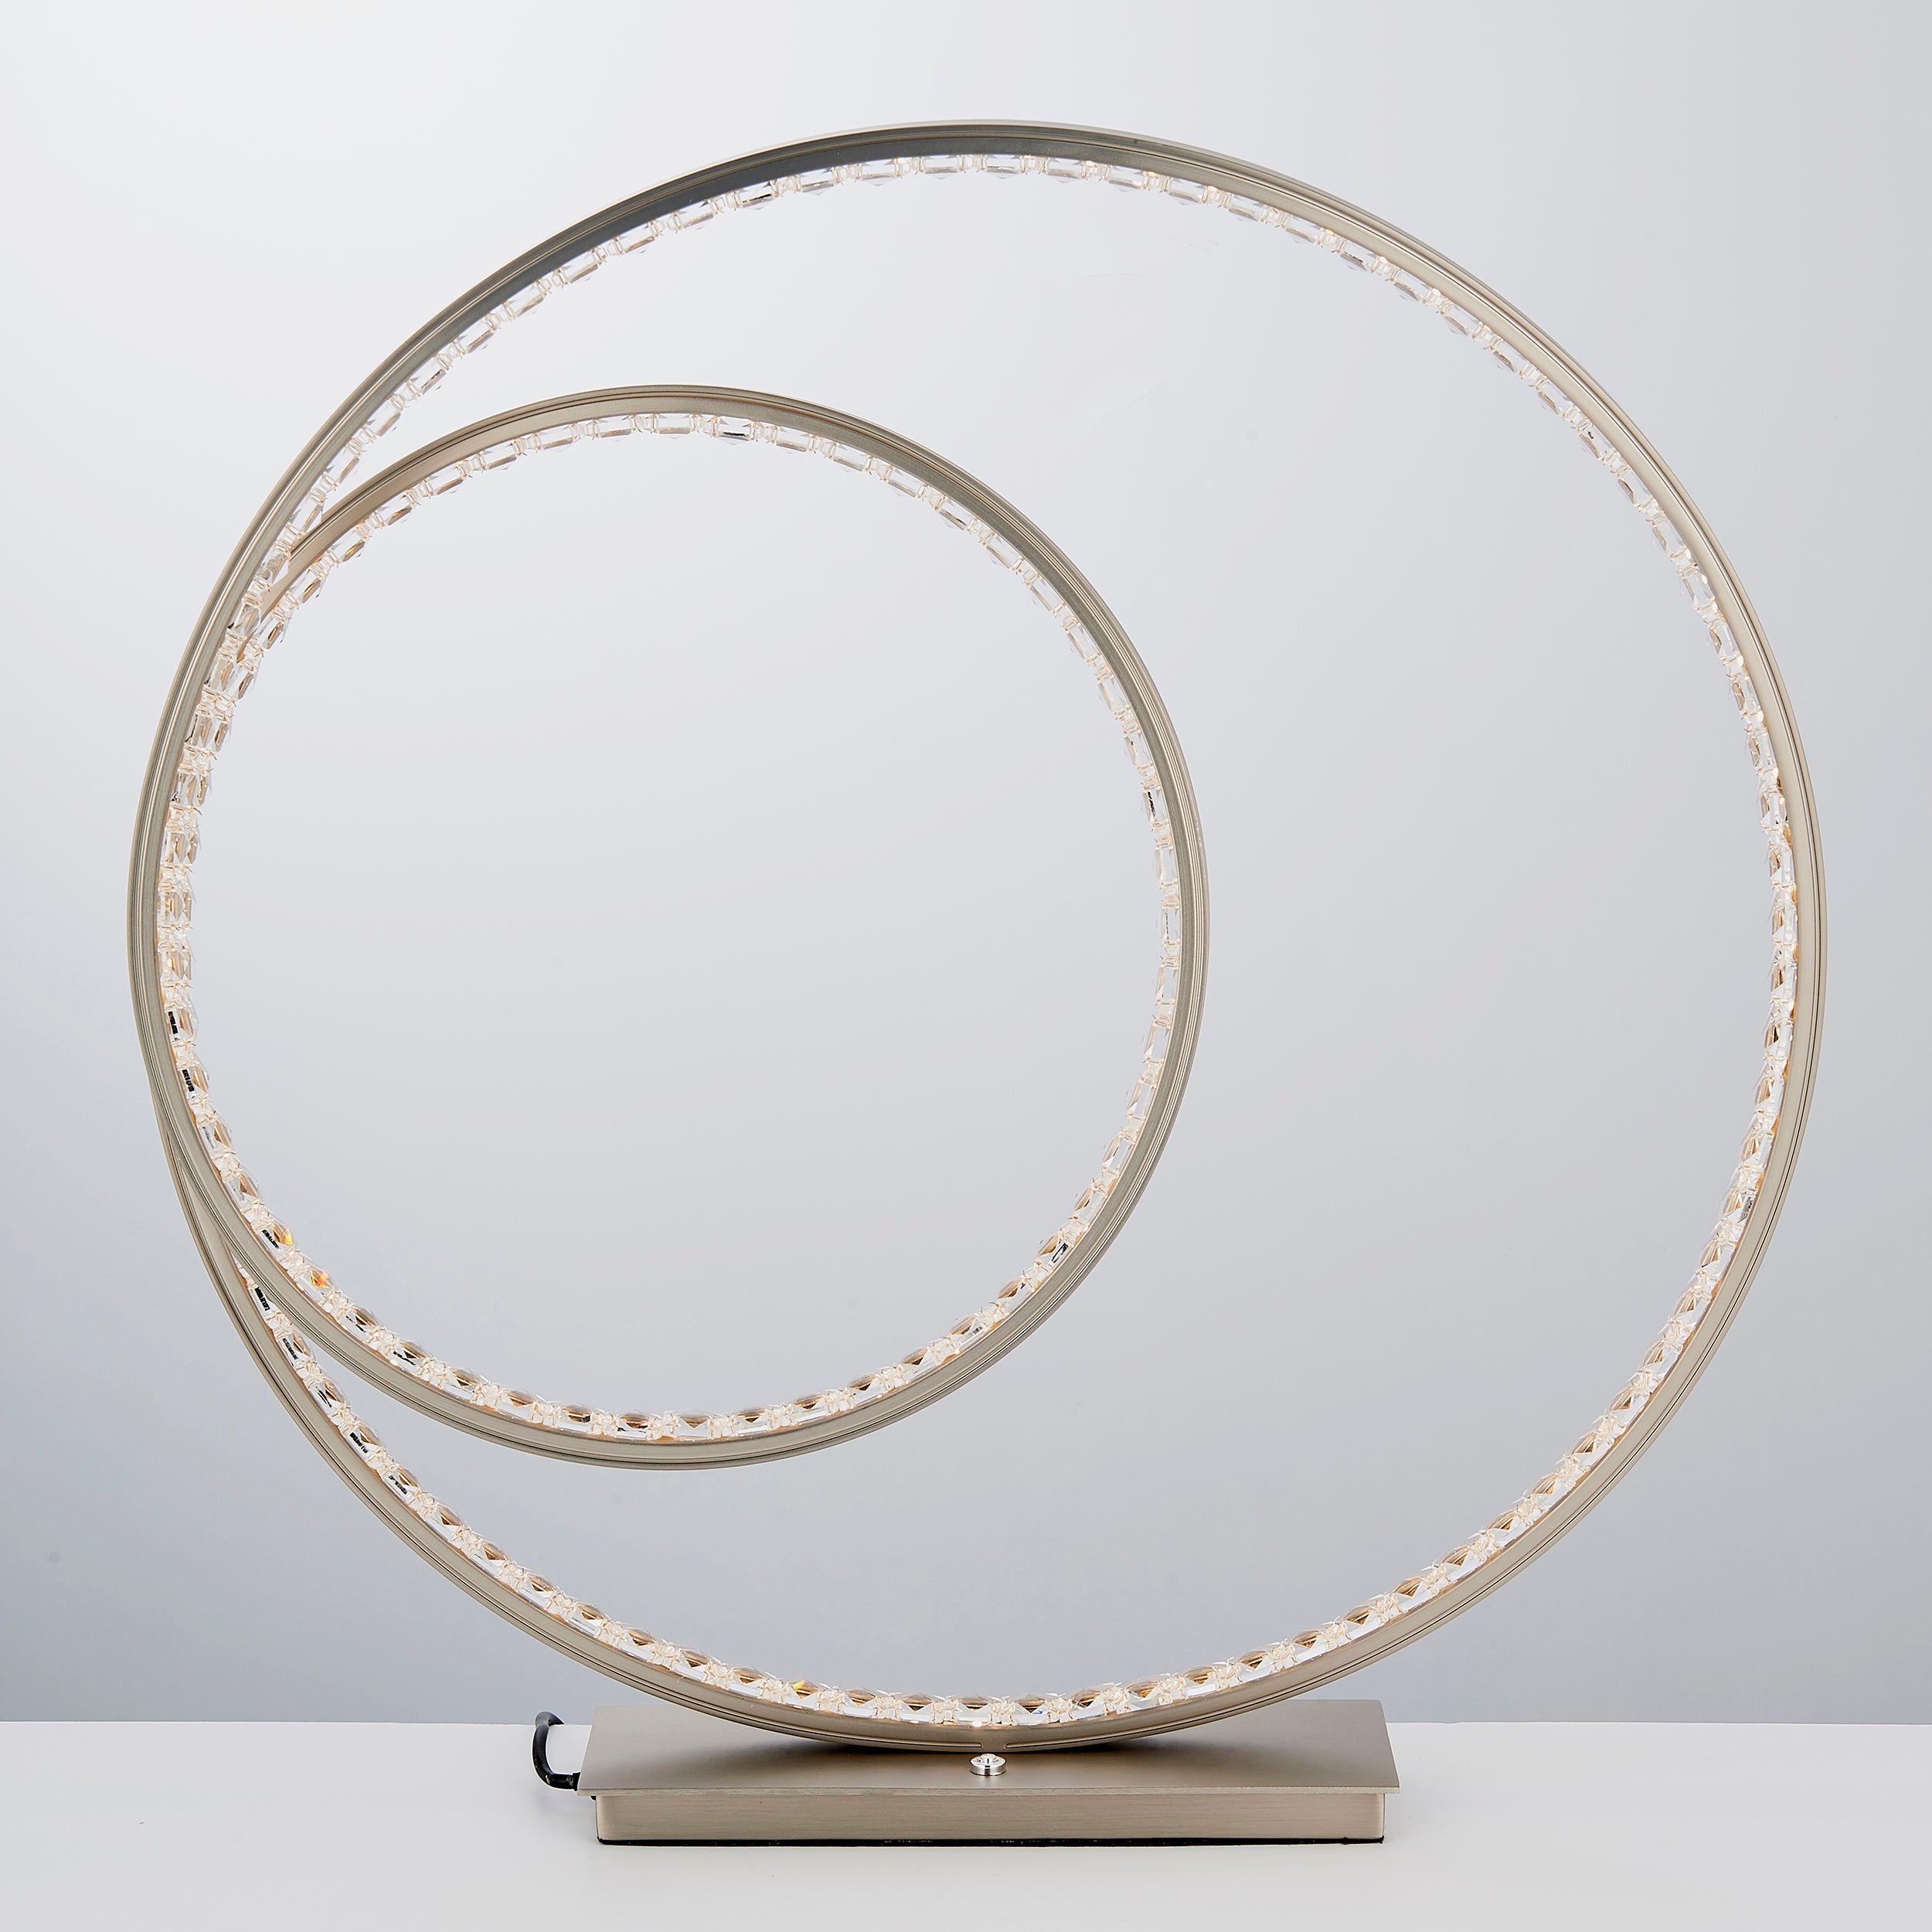 Eternity Touch Table Lamp. Matt Nickel & Crystal Finish